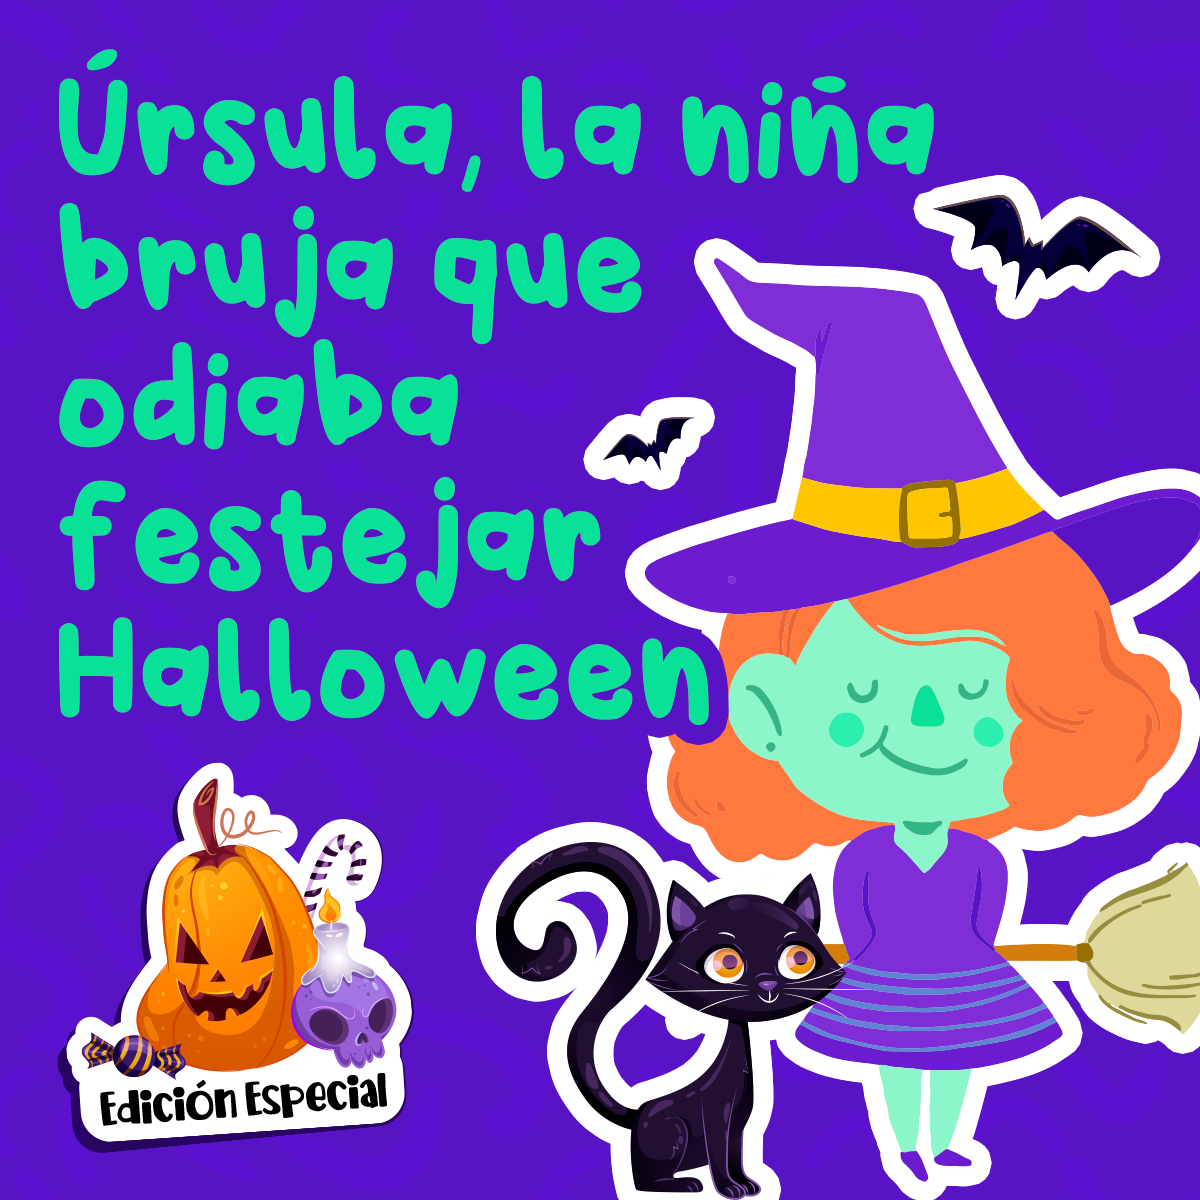 Ursula, la niña bruja que odiaba festejar Halloween